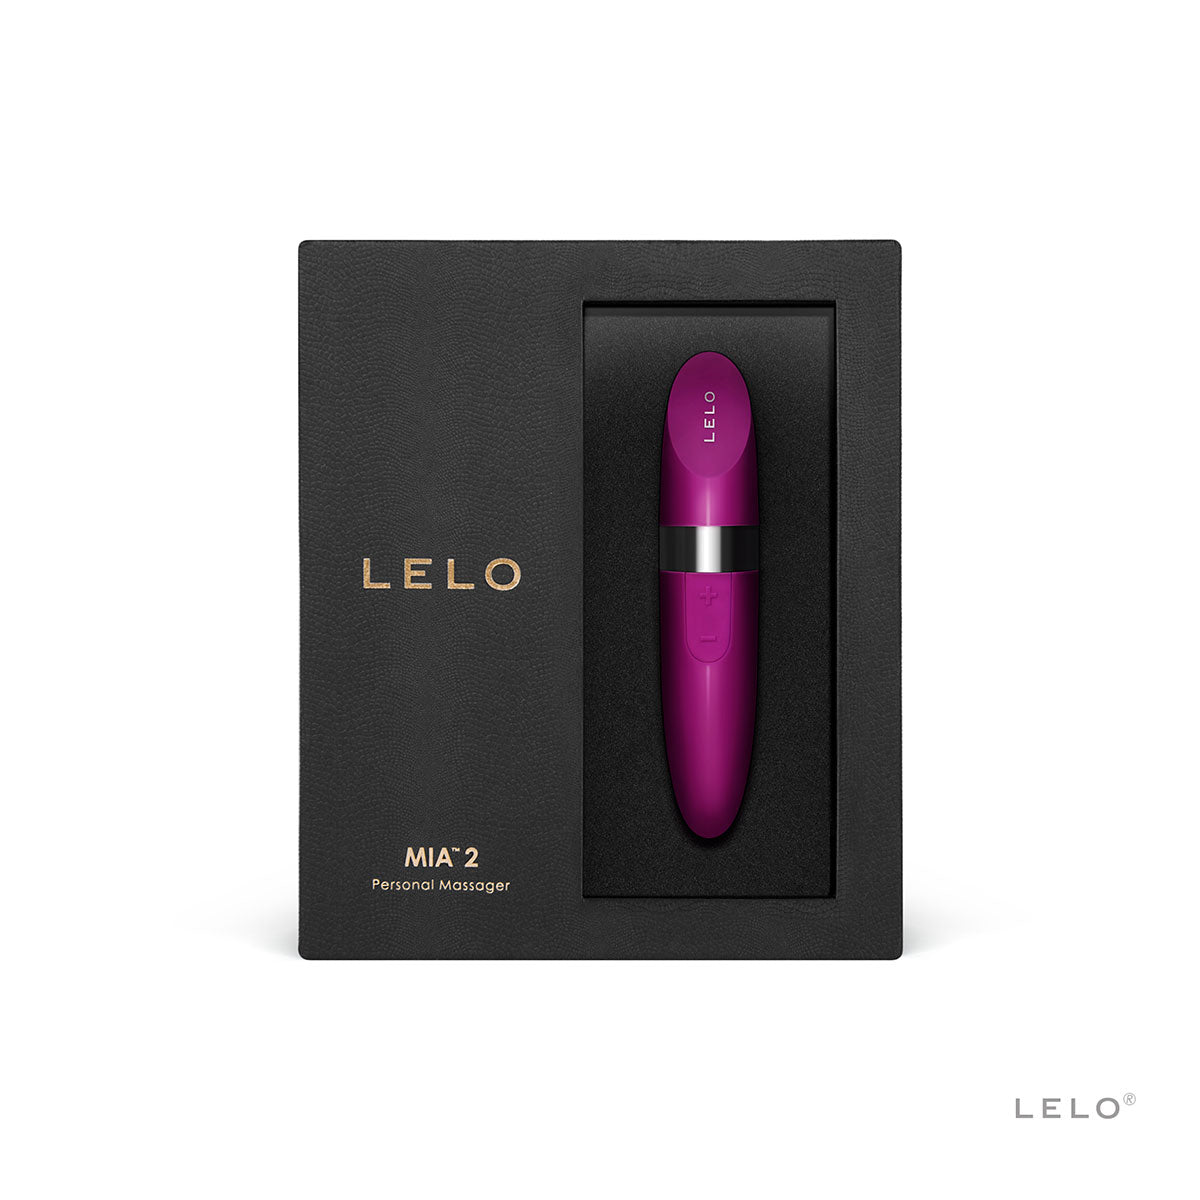 LELO Mia 2: Powerful Clitoral Stimulator